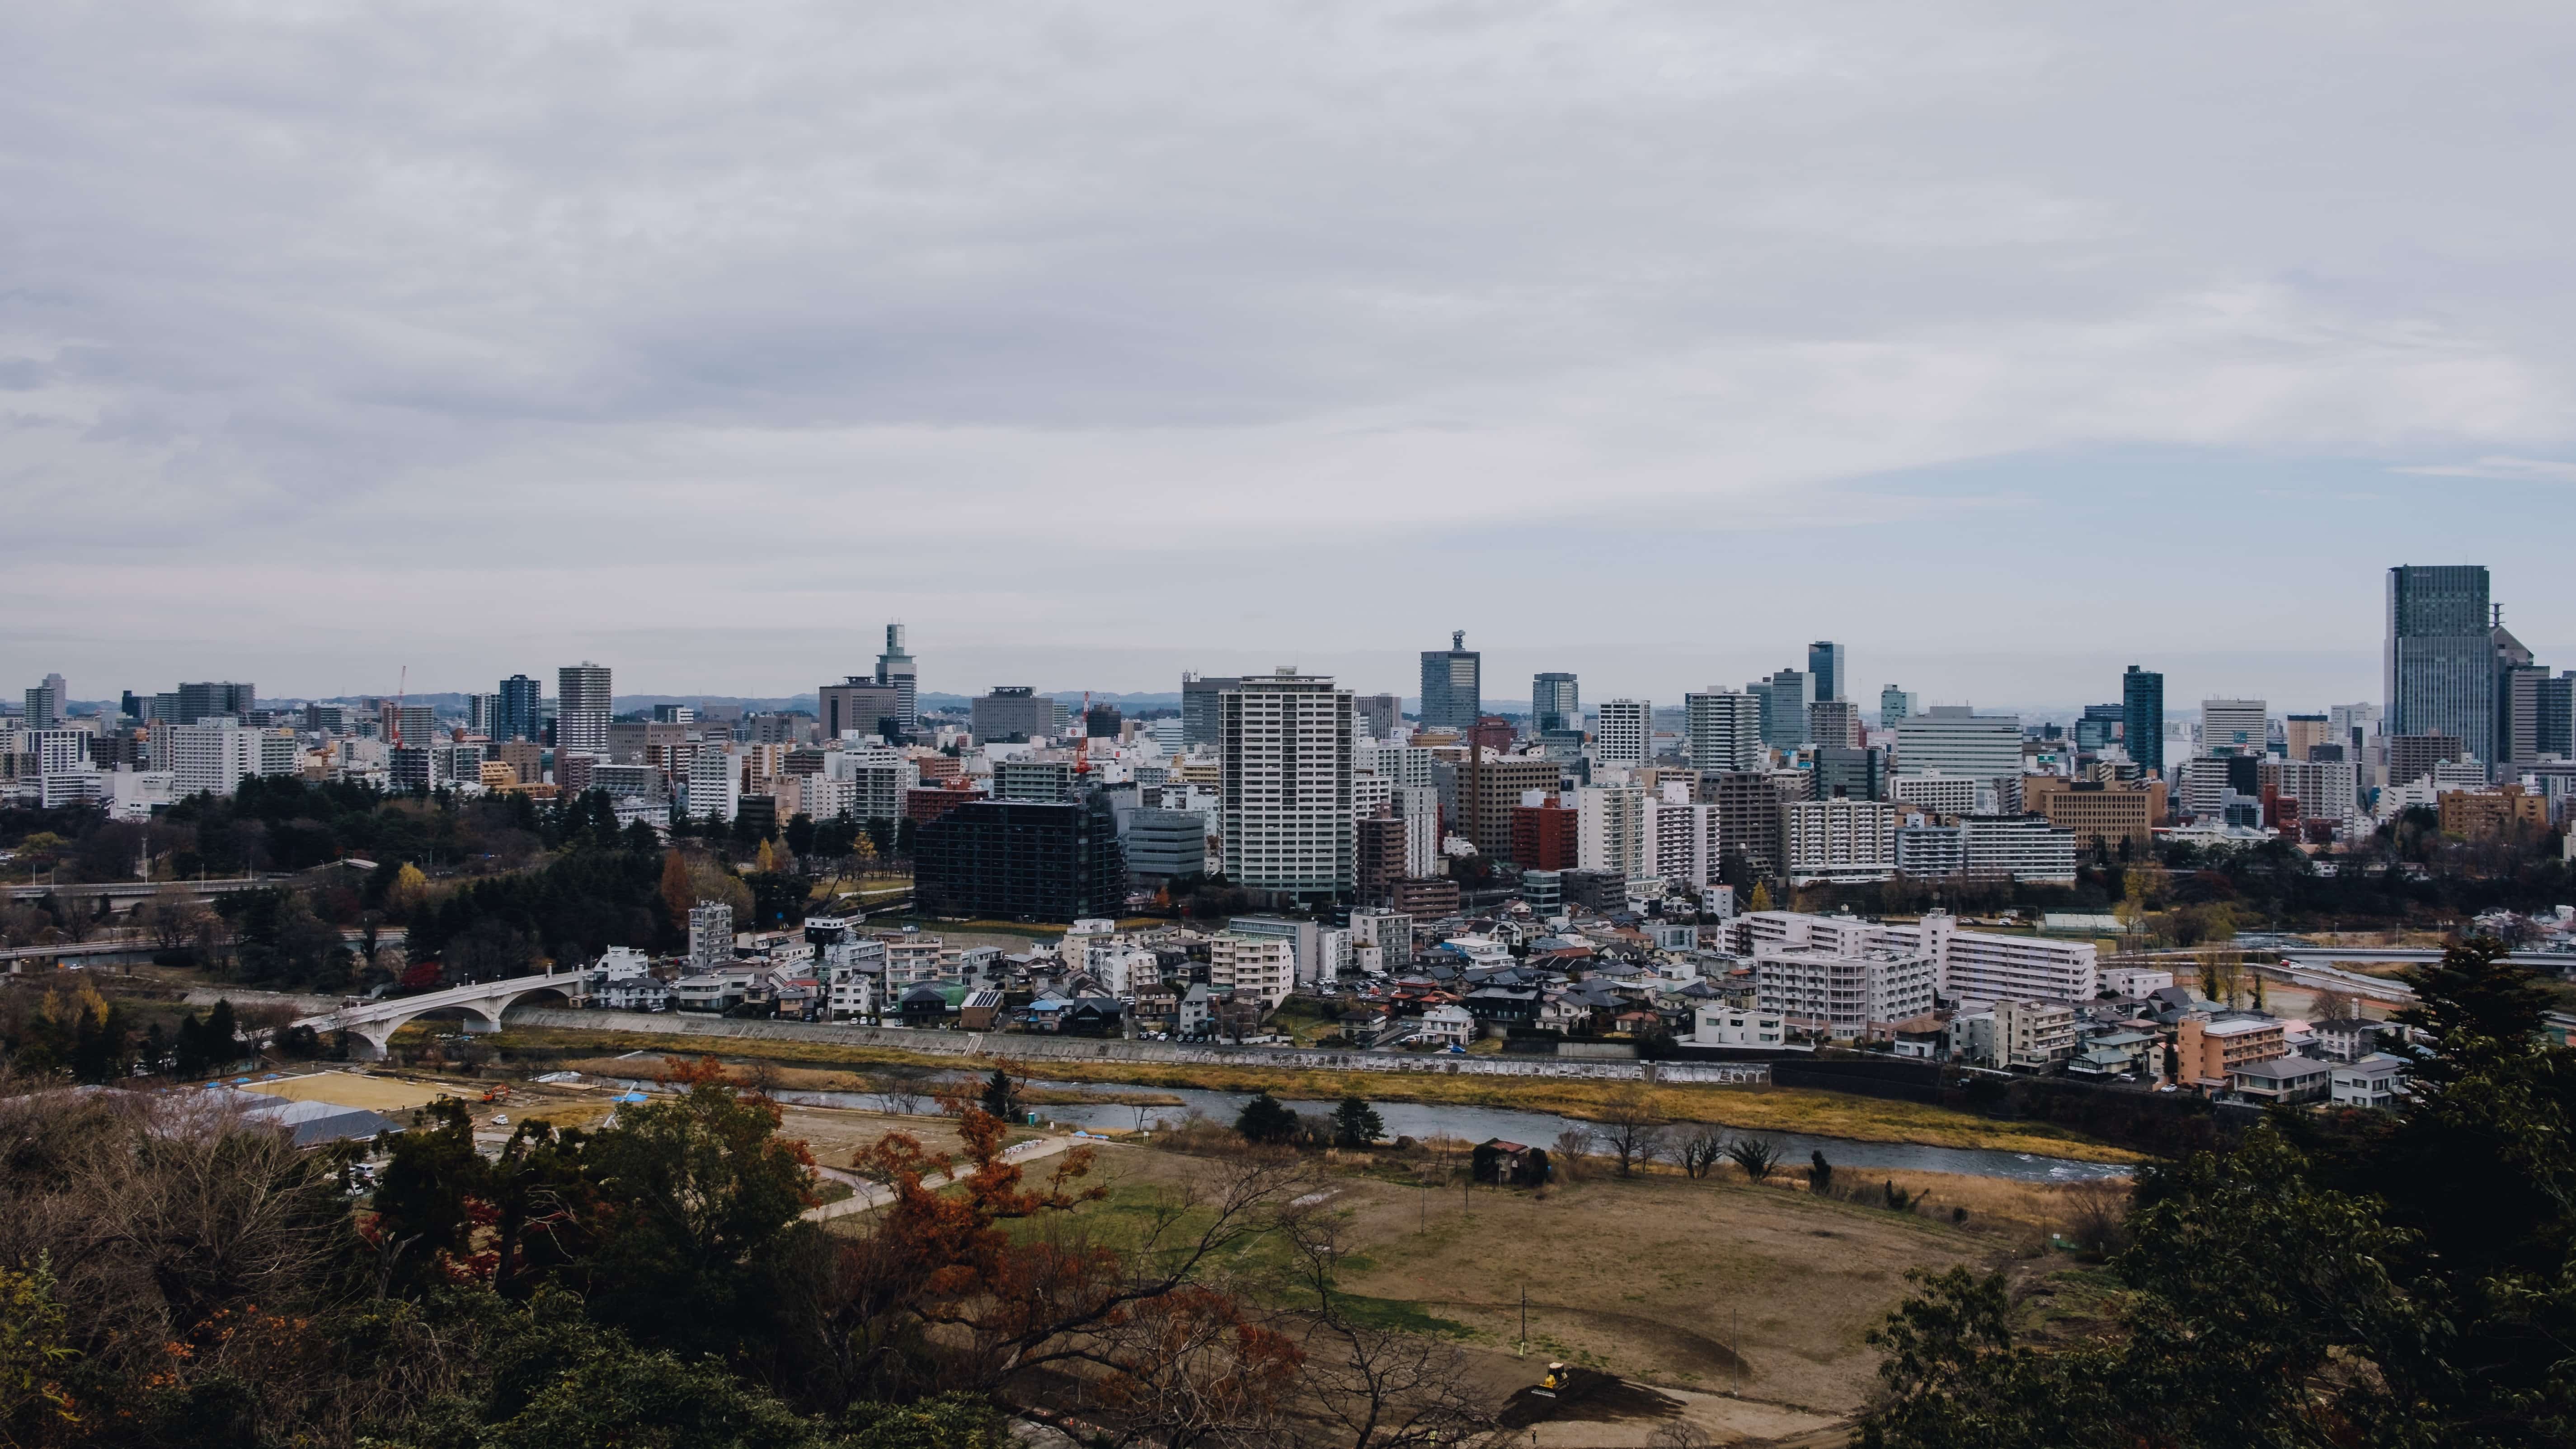 The skyline of Sendai Japan